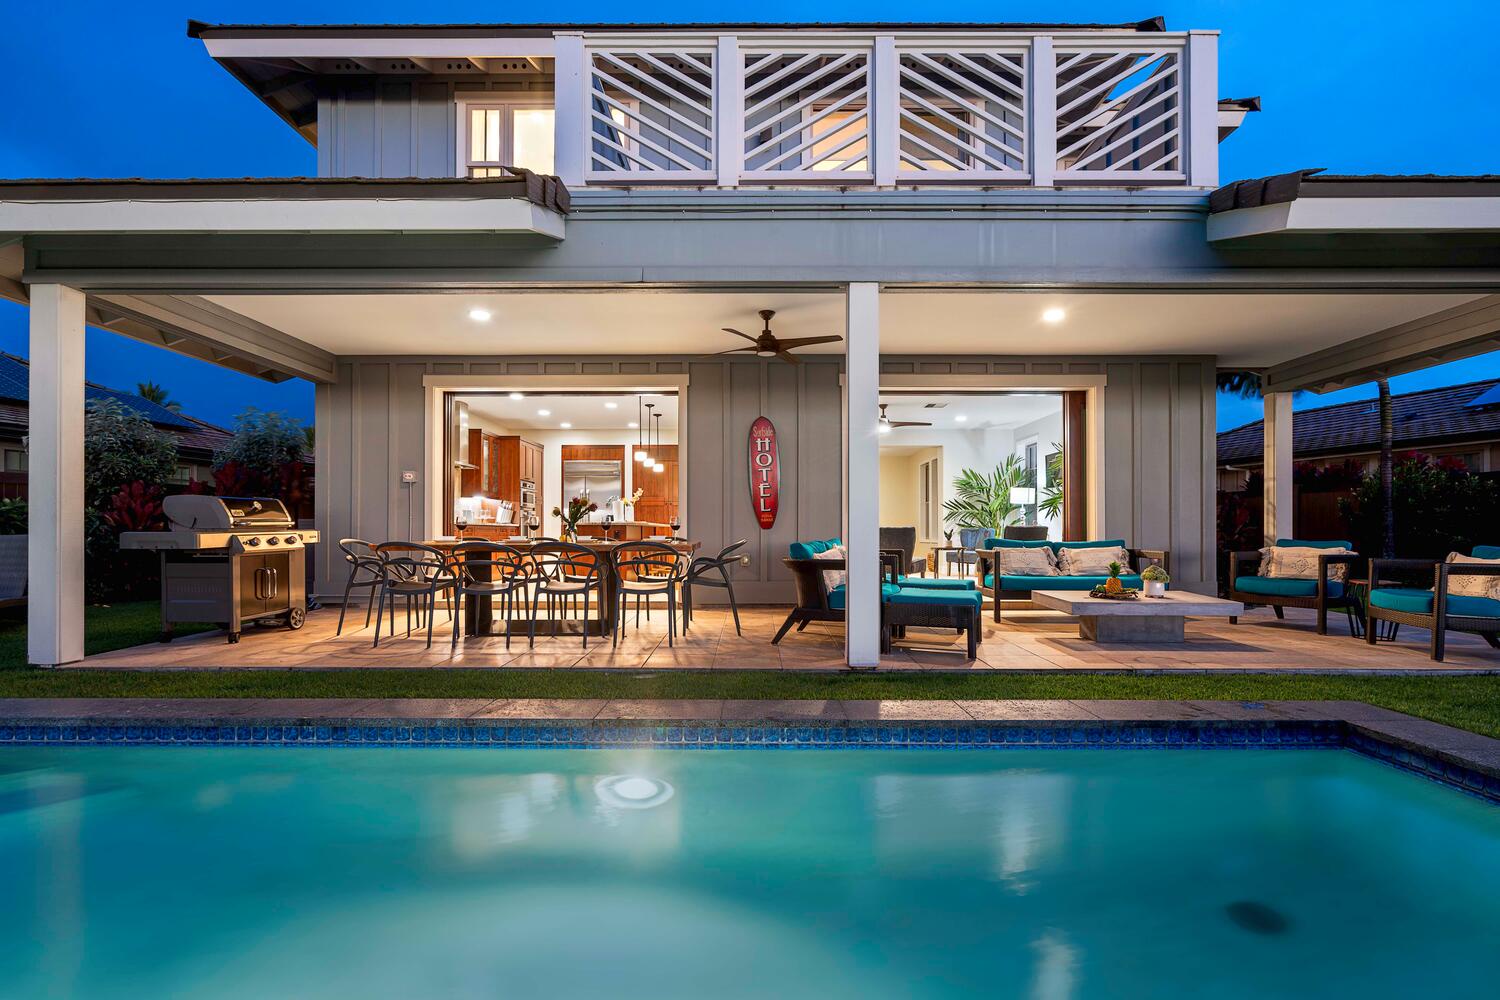 Kailua-Kona Vacation Rentals, Holua Kai #26 - Poolside evening ambiance with open living areas.